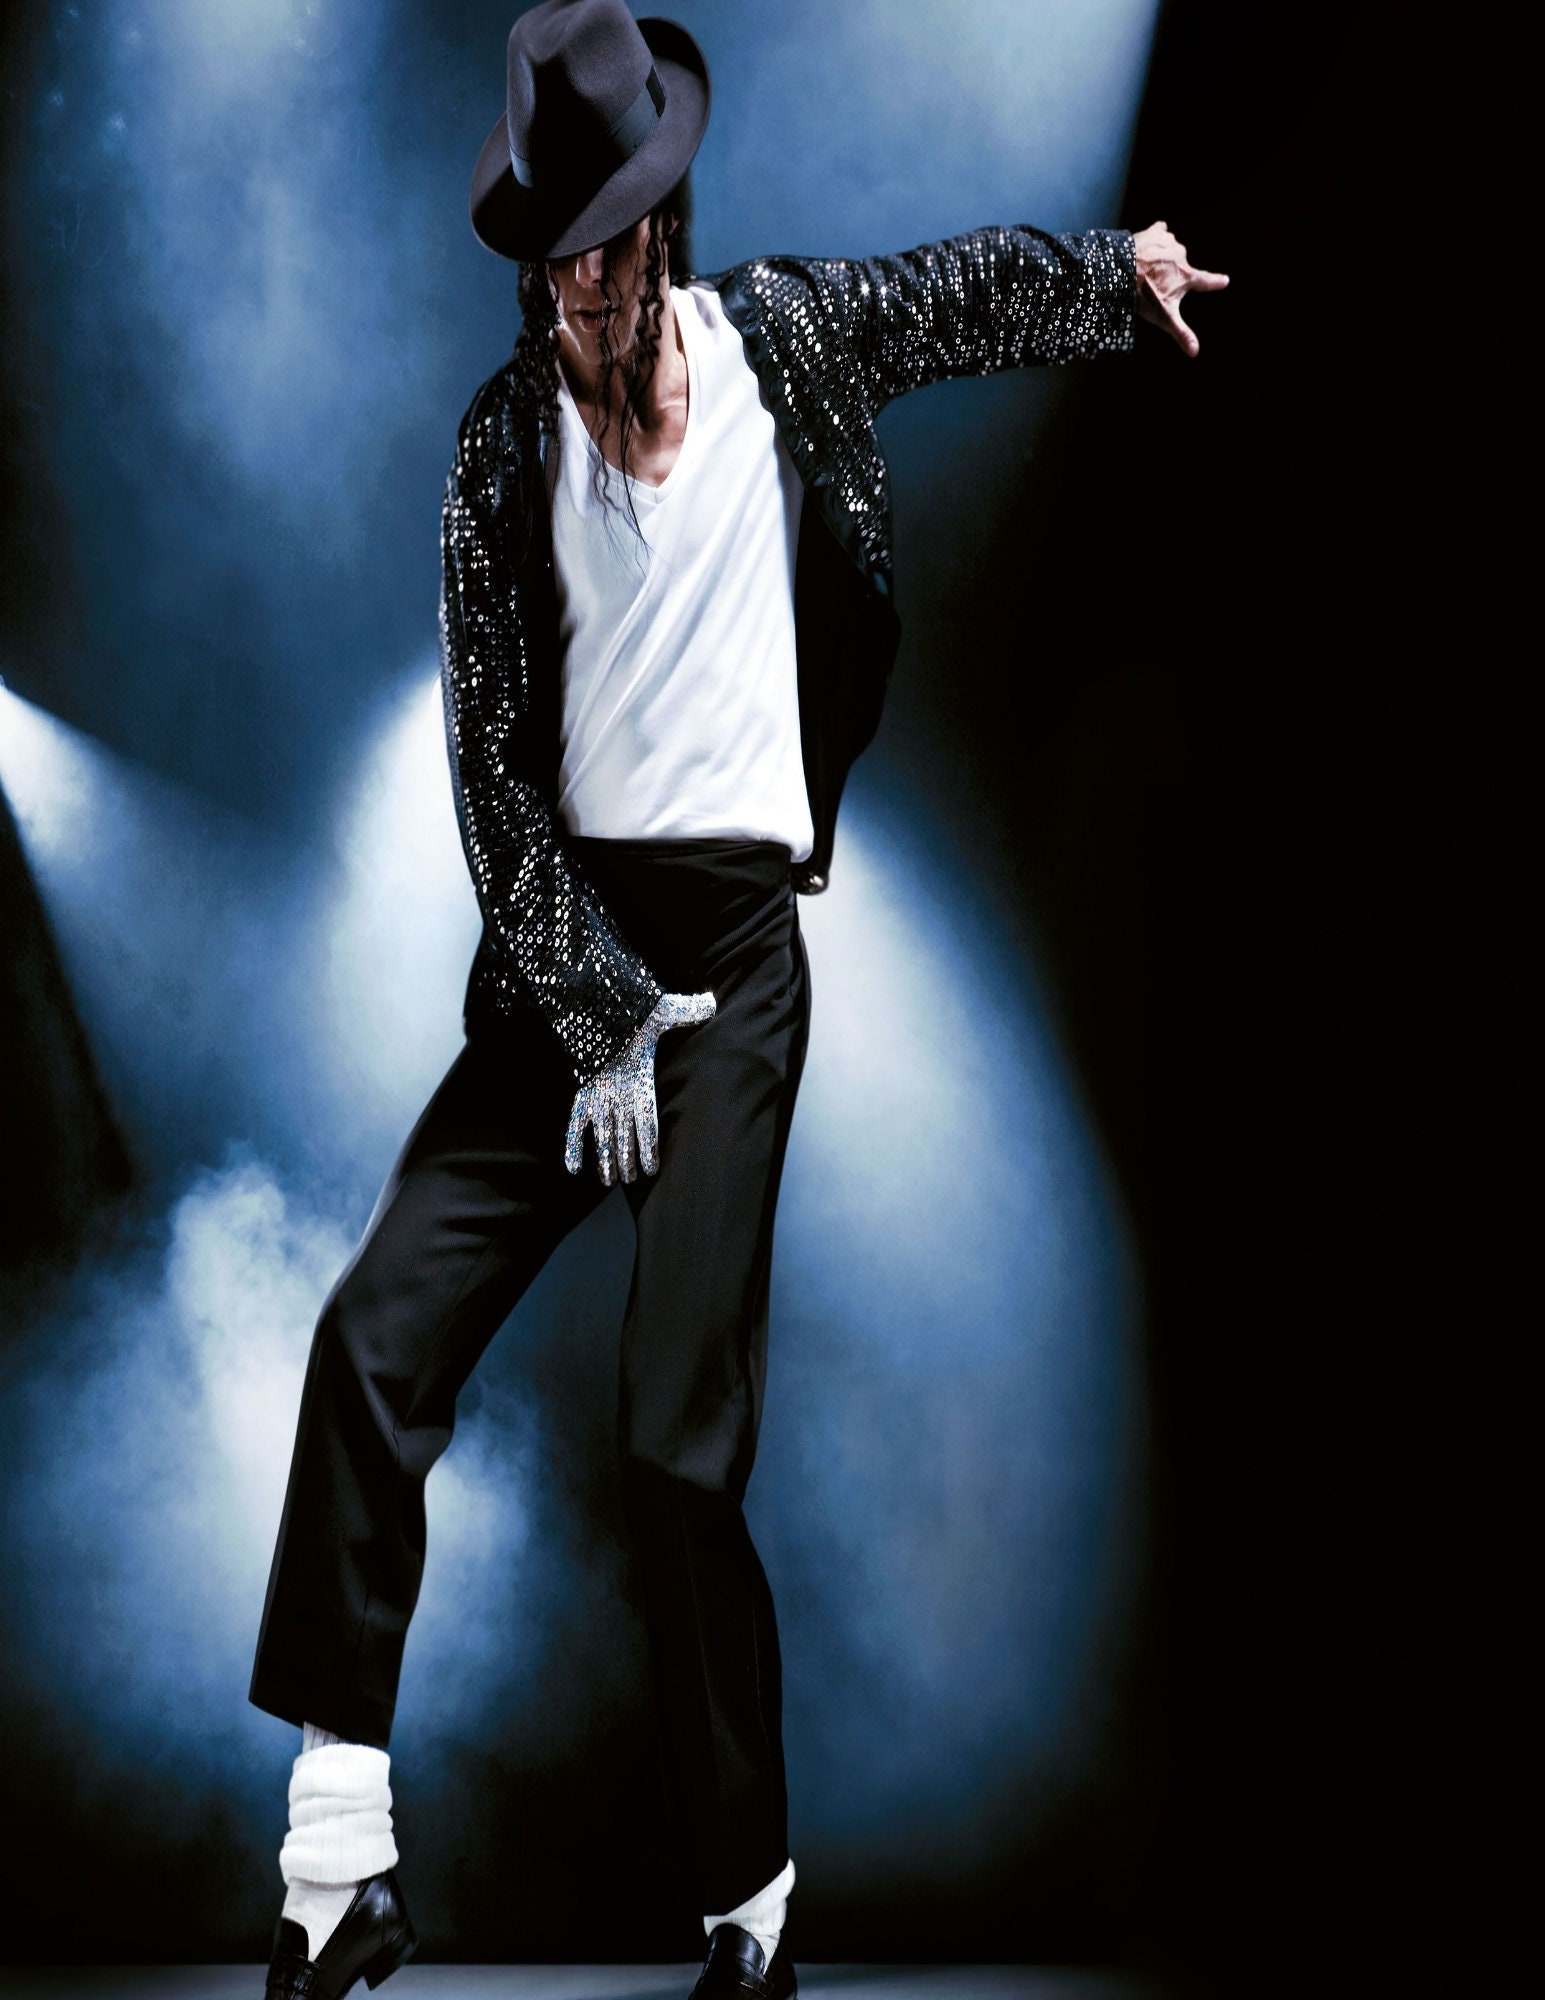 Michael Jackson Dancing With the Diamond Glove 